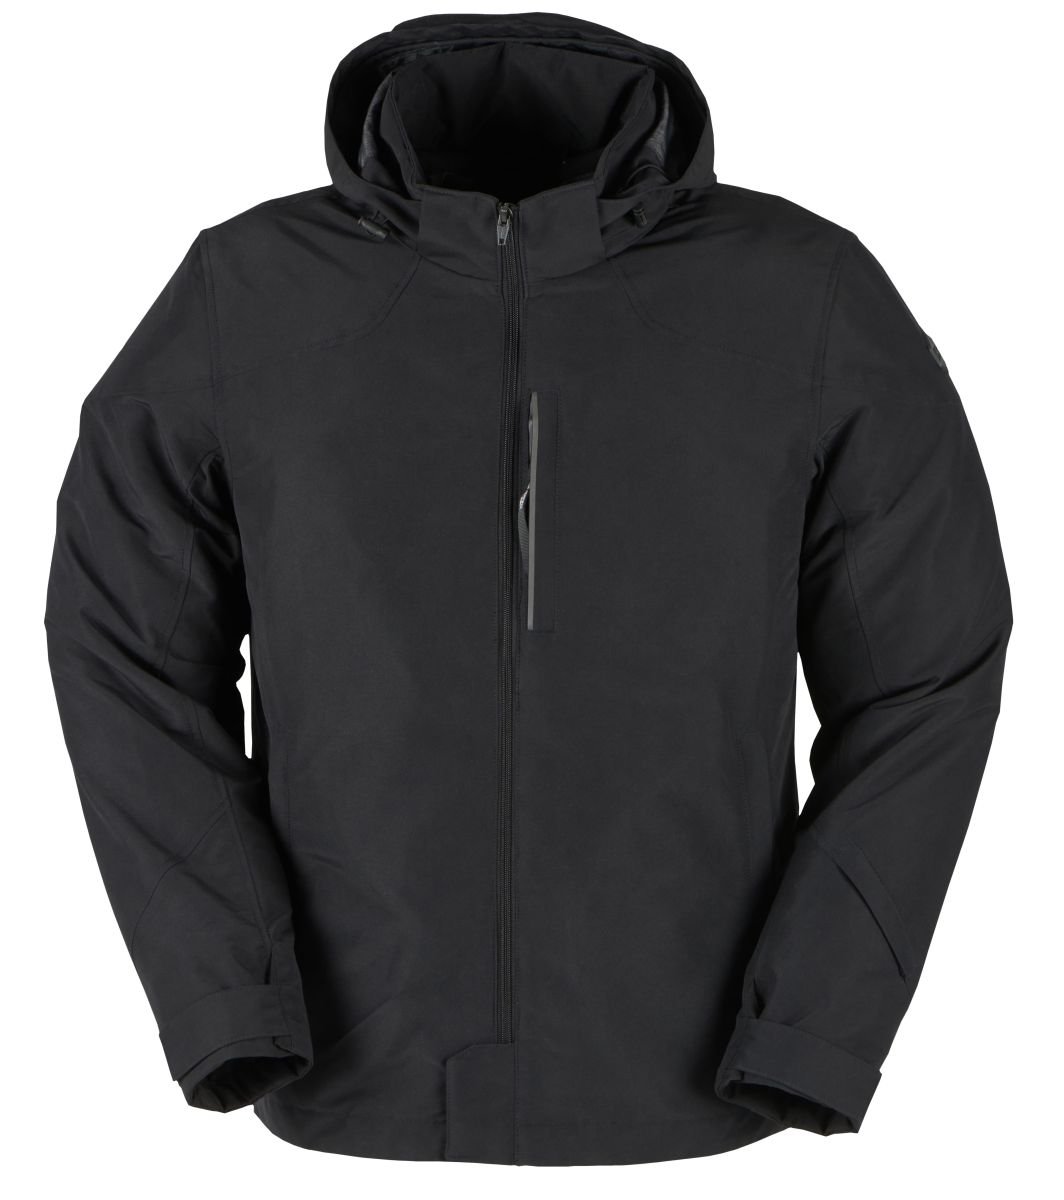 Image of Furygan London Evo 2 Jacket Black Size 2XL EN